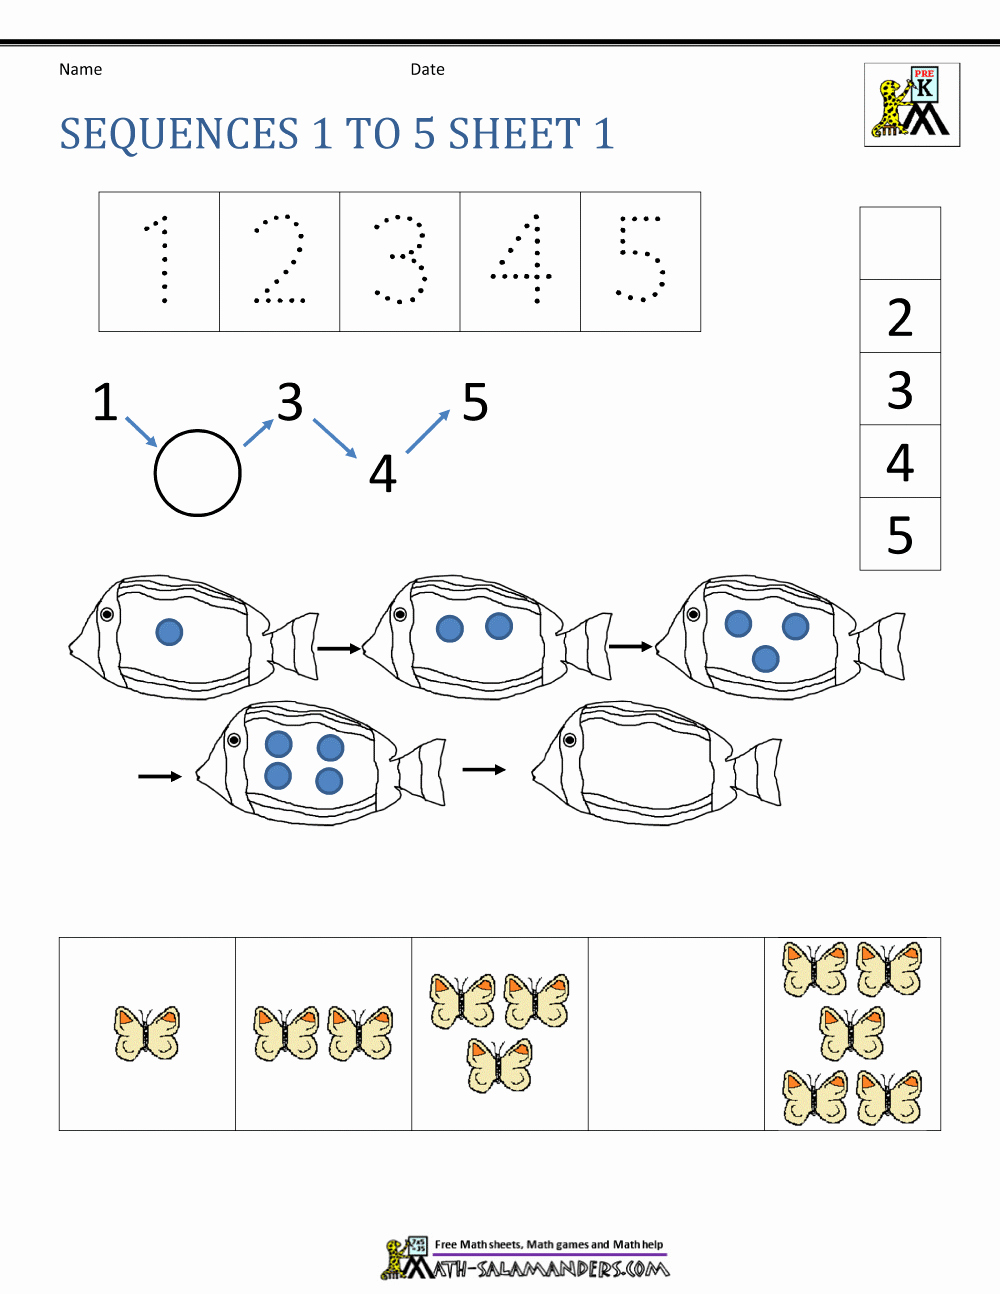 Arithmetic Sequence Worksheet Algebra 1 New Preschool Number Worksheets Sequencing to 10